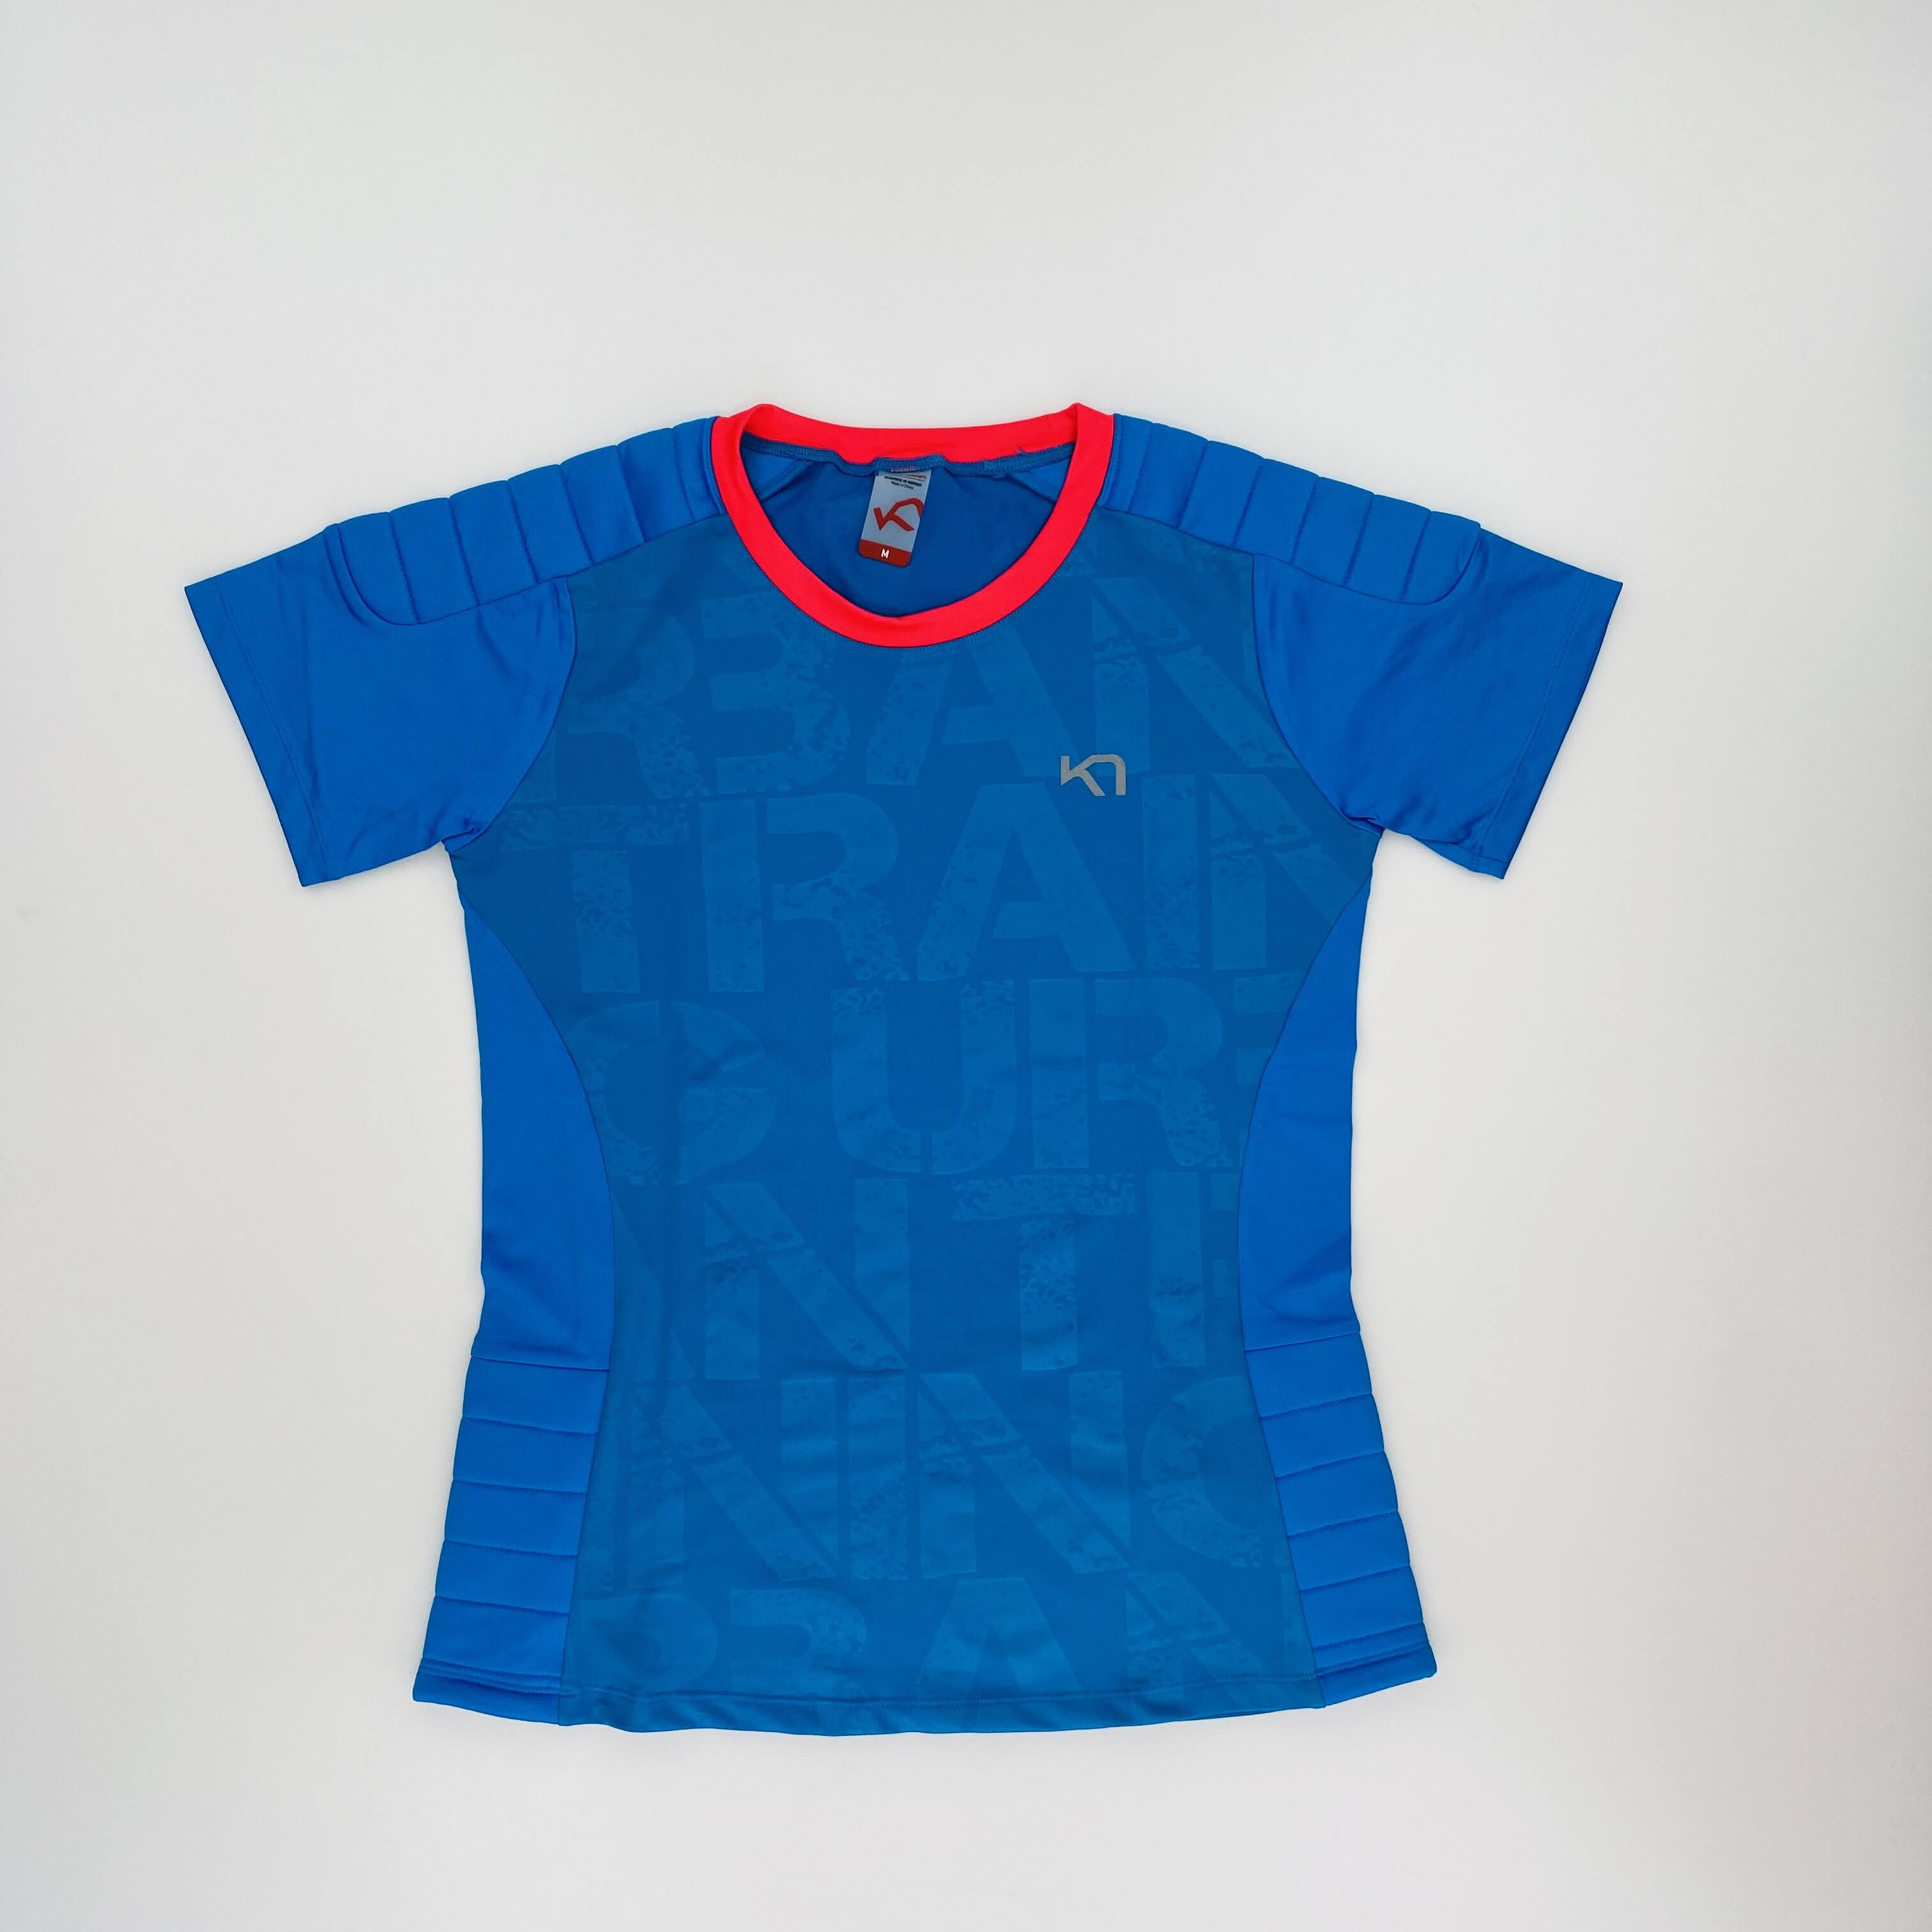 Kari Traa Frida Tee - T-shirt di seconda mano - Donna - Blu - M | Hardloop